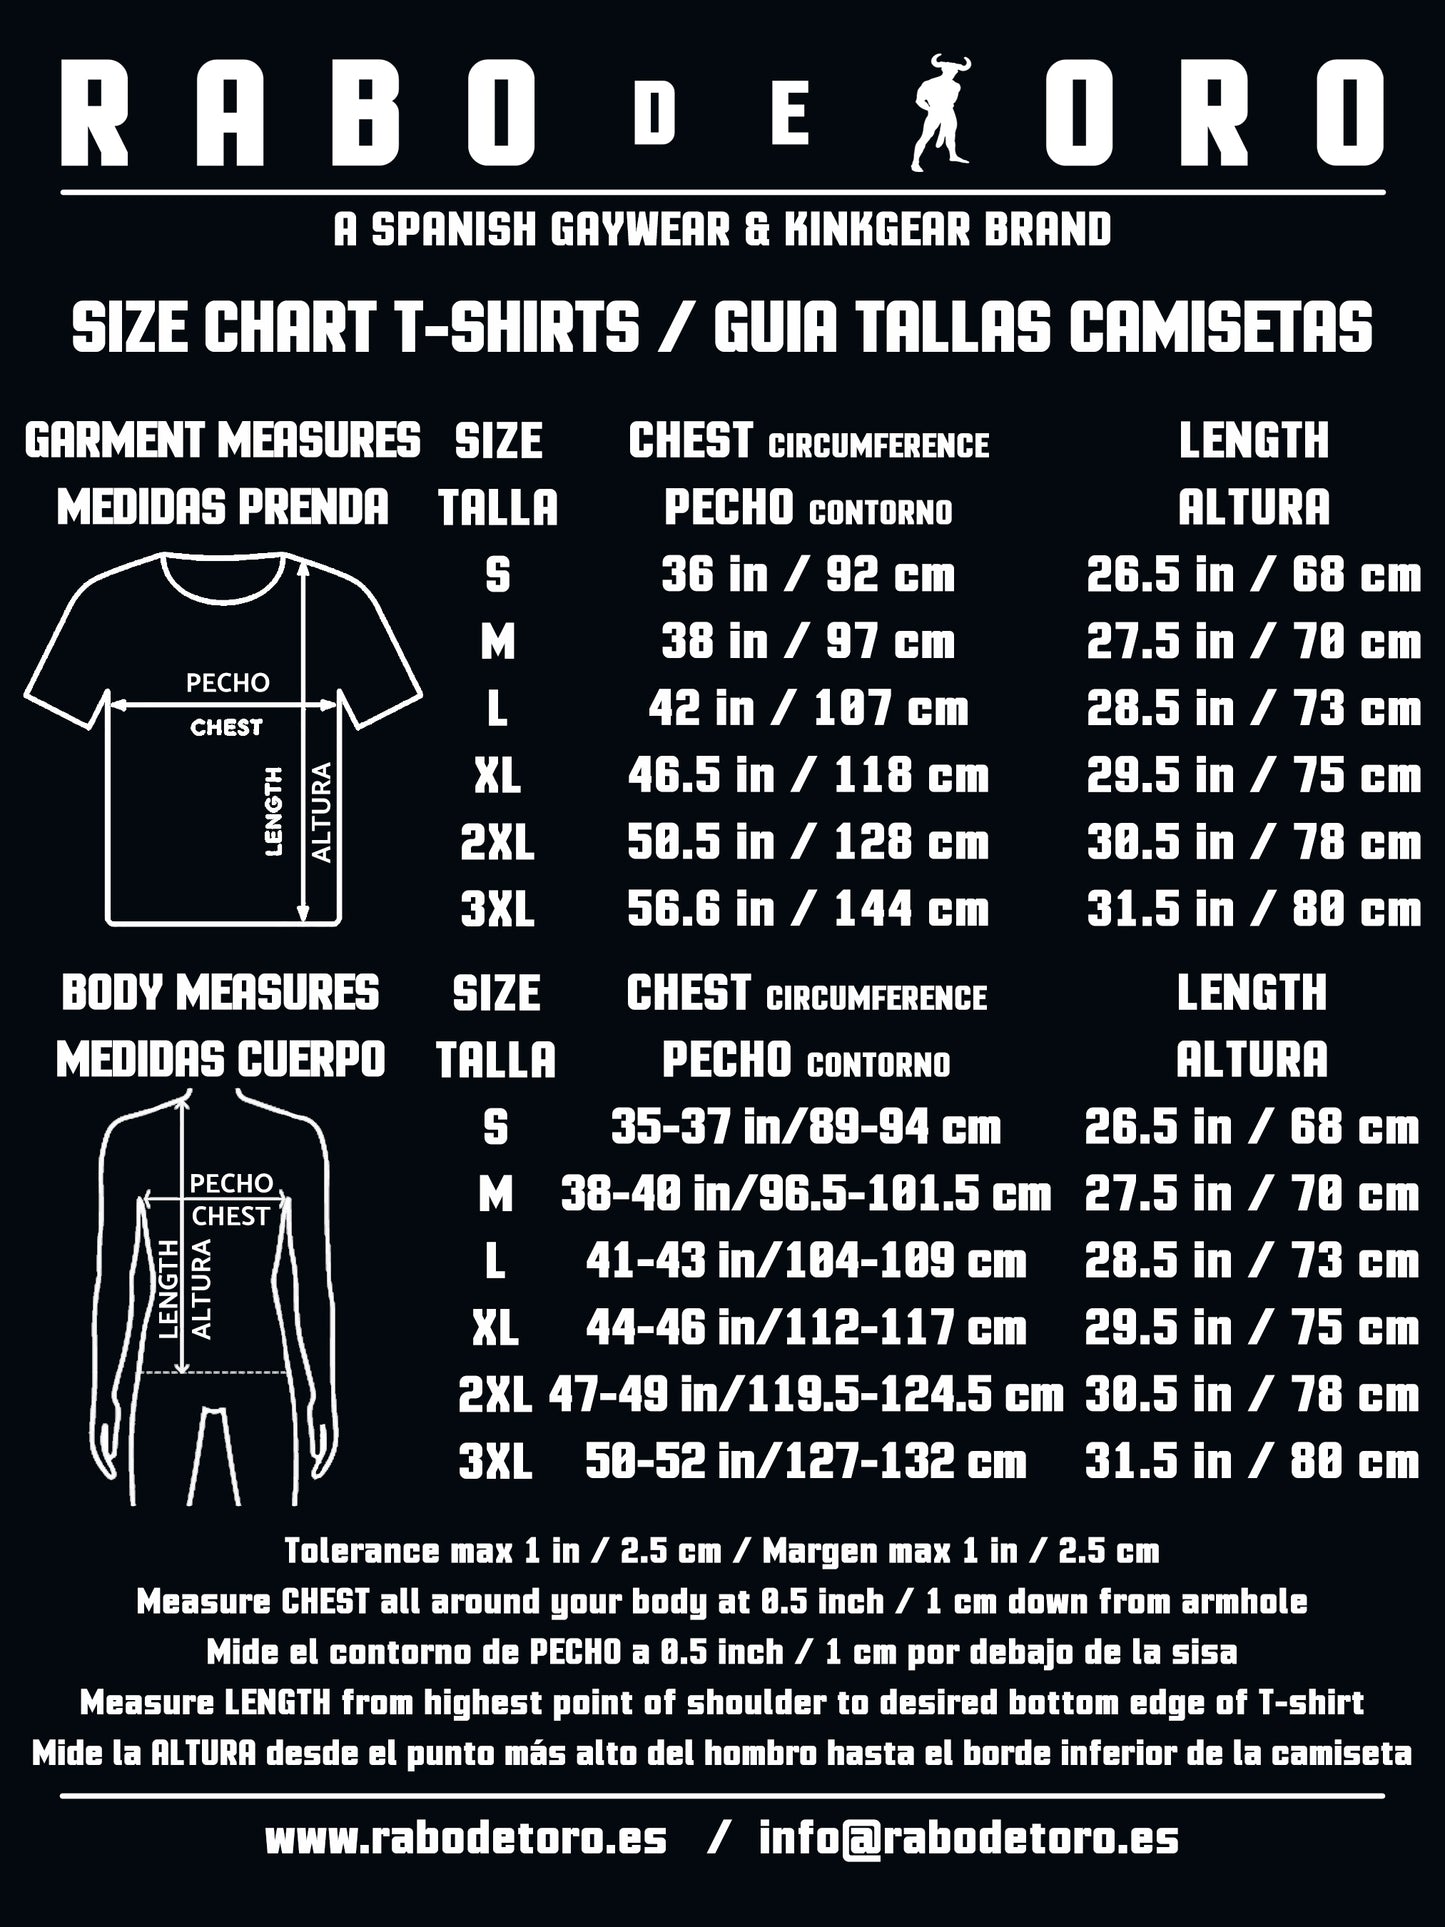 SADIST Black T-Shirt with BDSM Hanky Code details